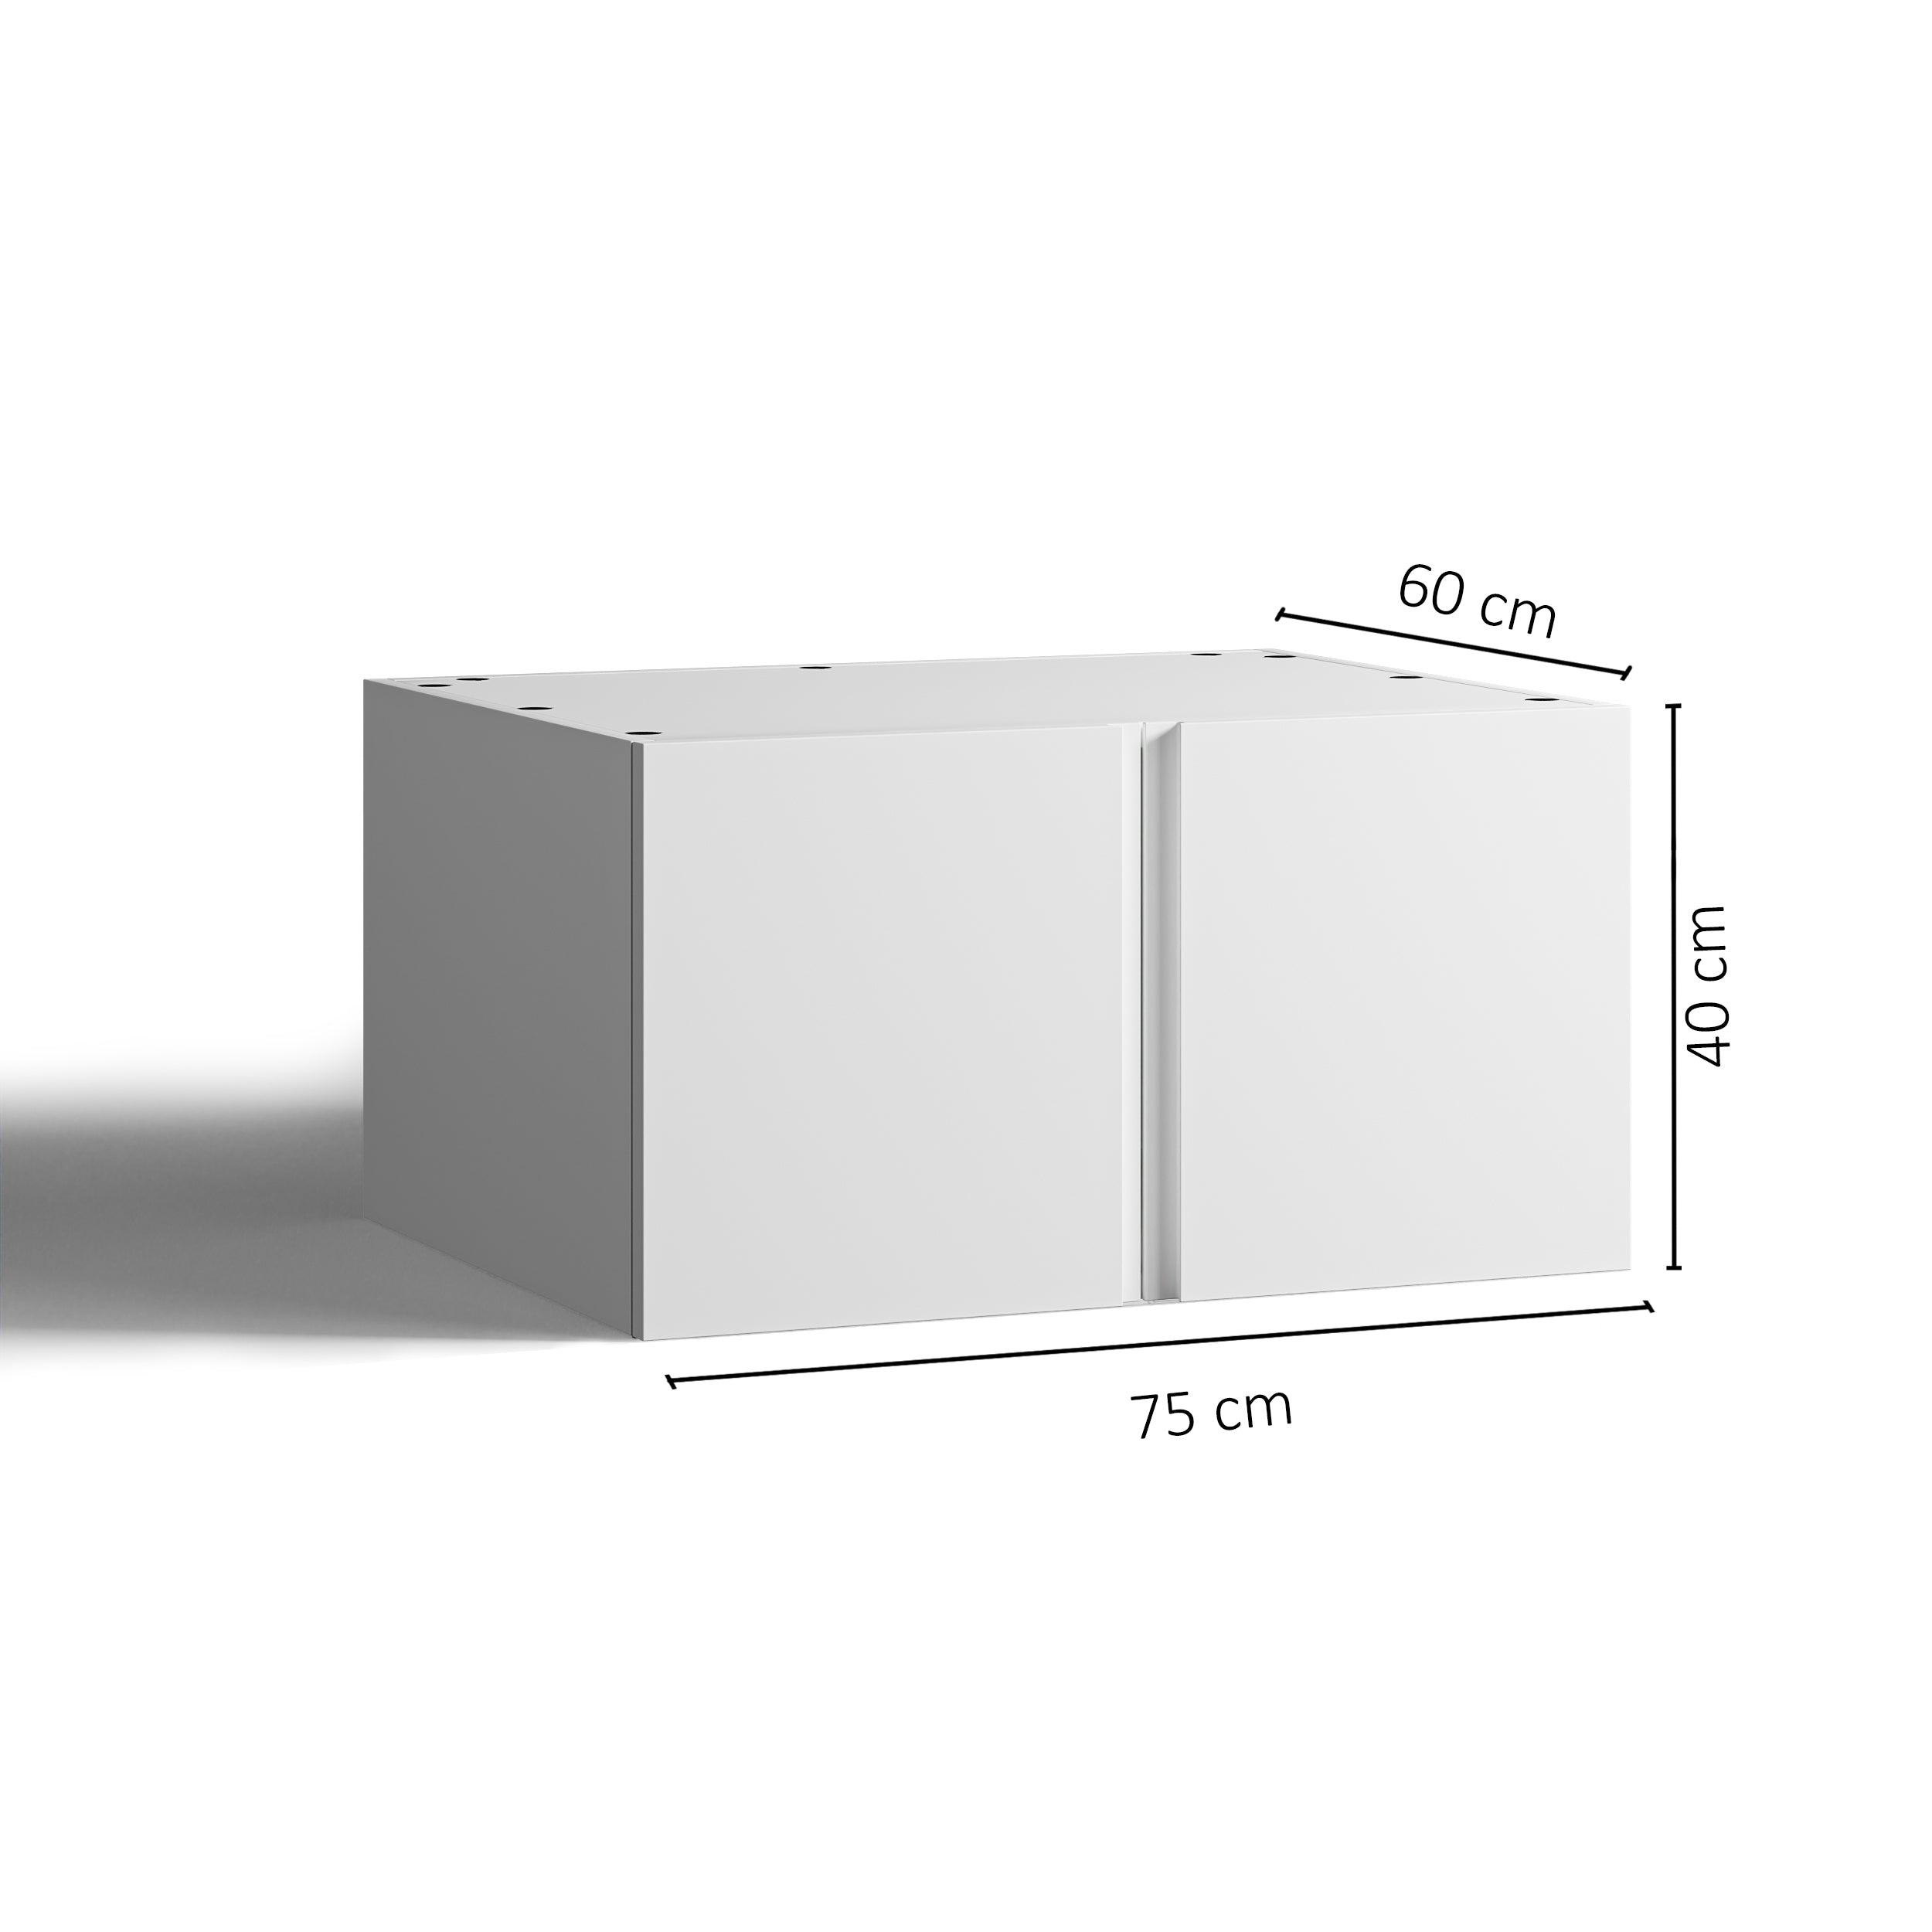 75x40 - Cabinet (58cm D) w 2 Doors - Finger Pull - PAX